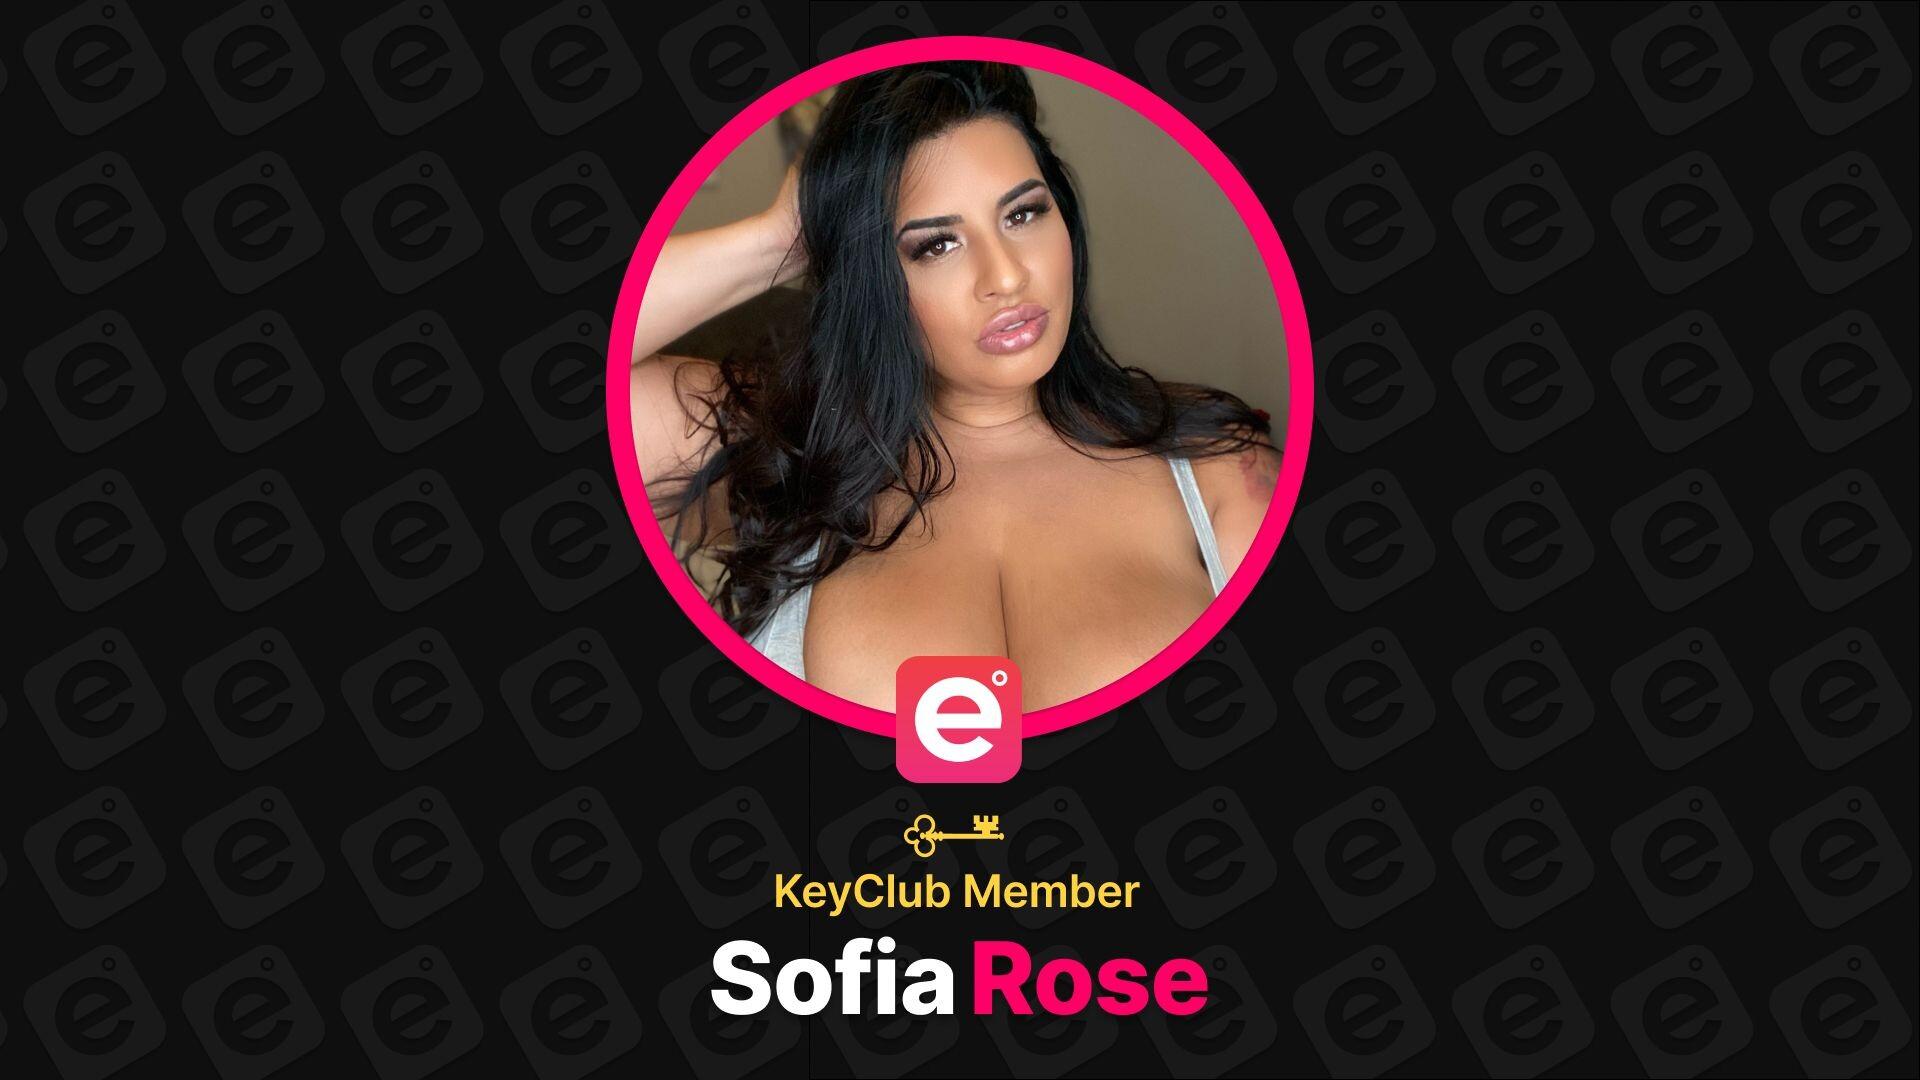 Sofia rose bbw onlyfans